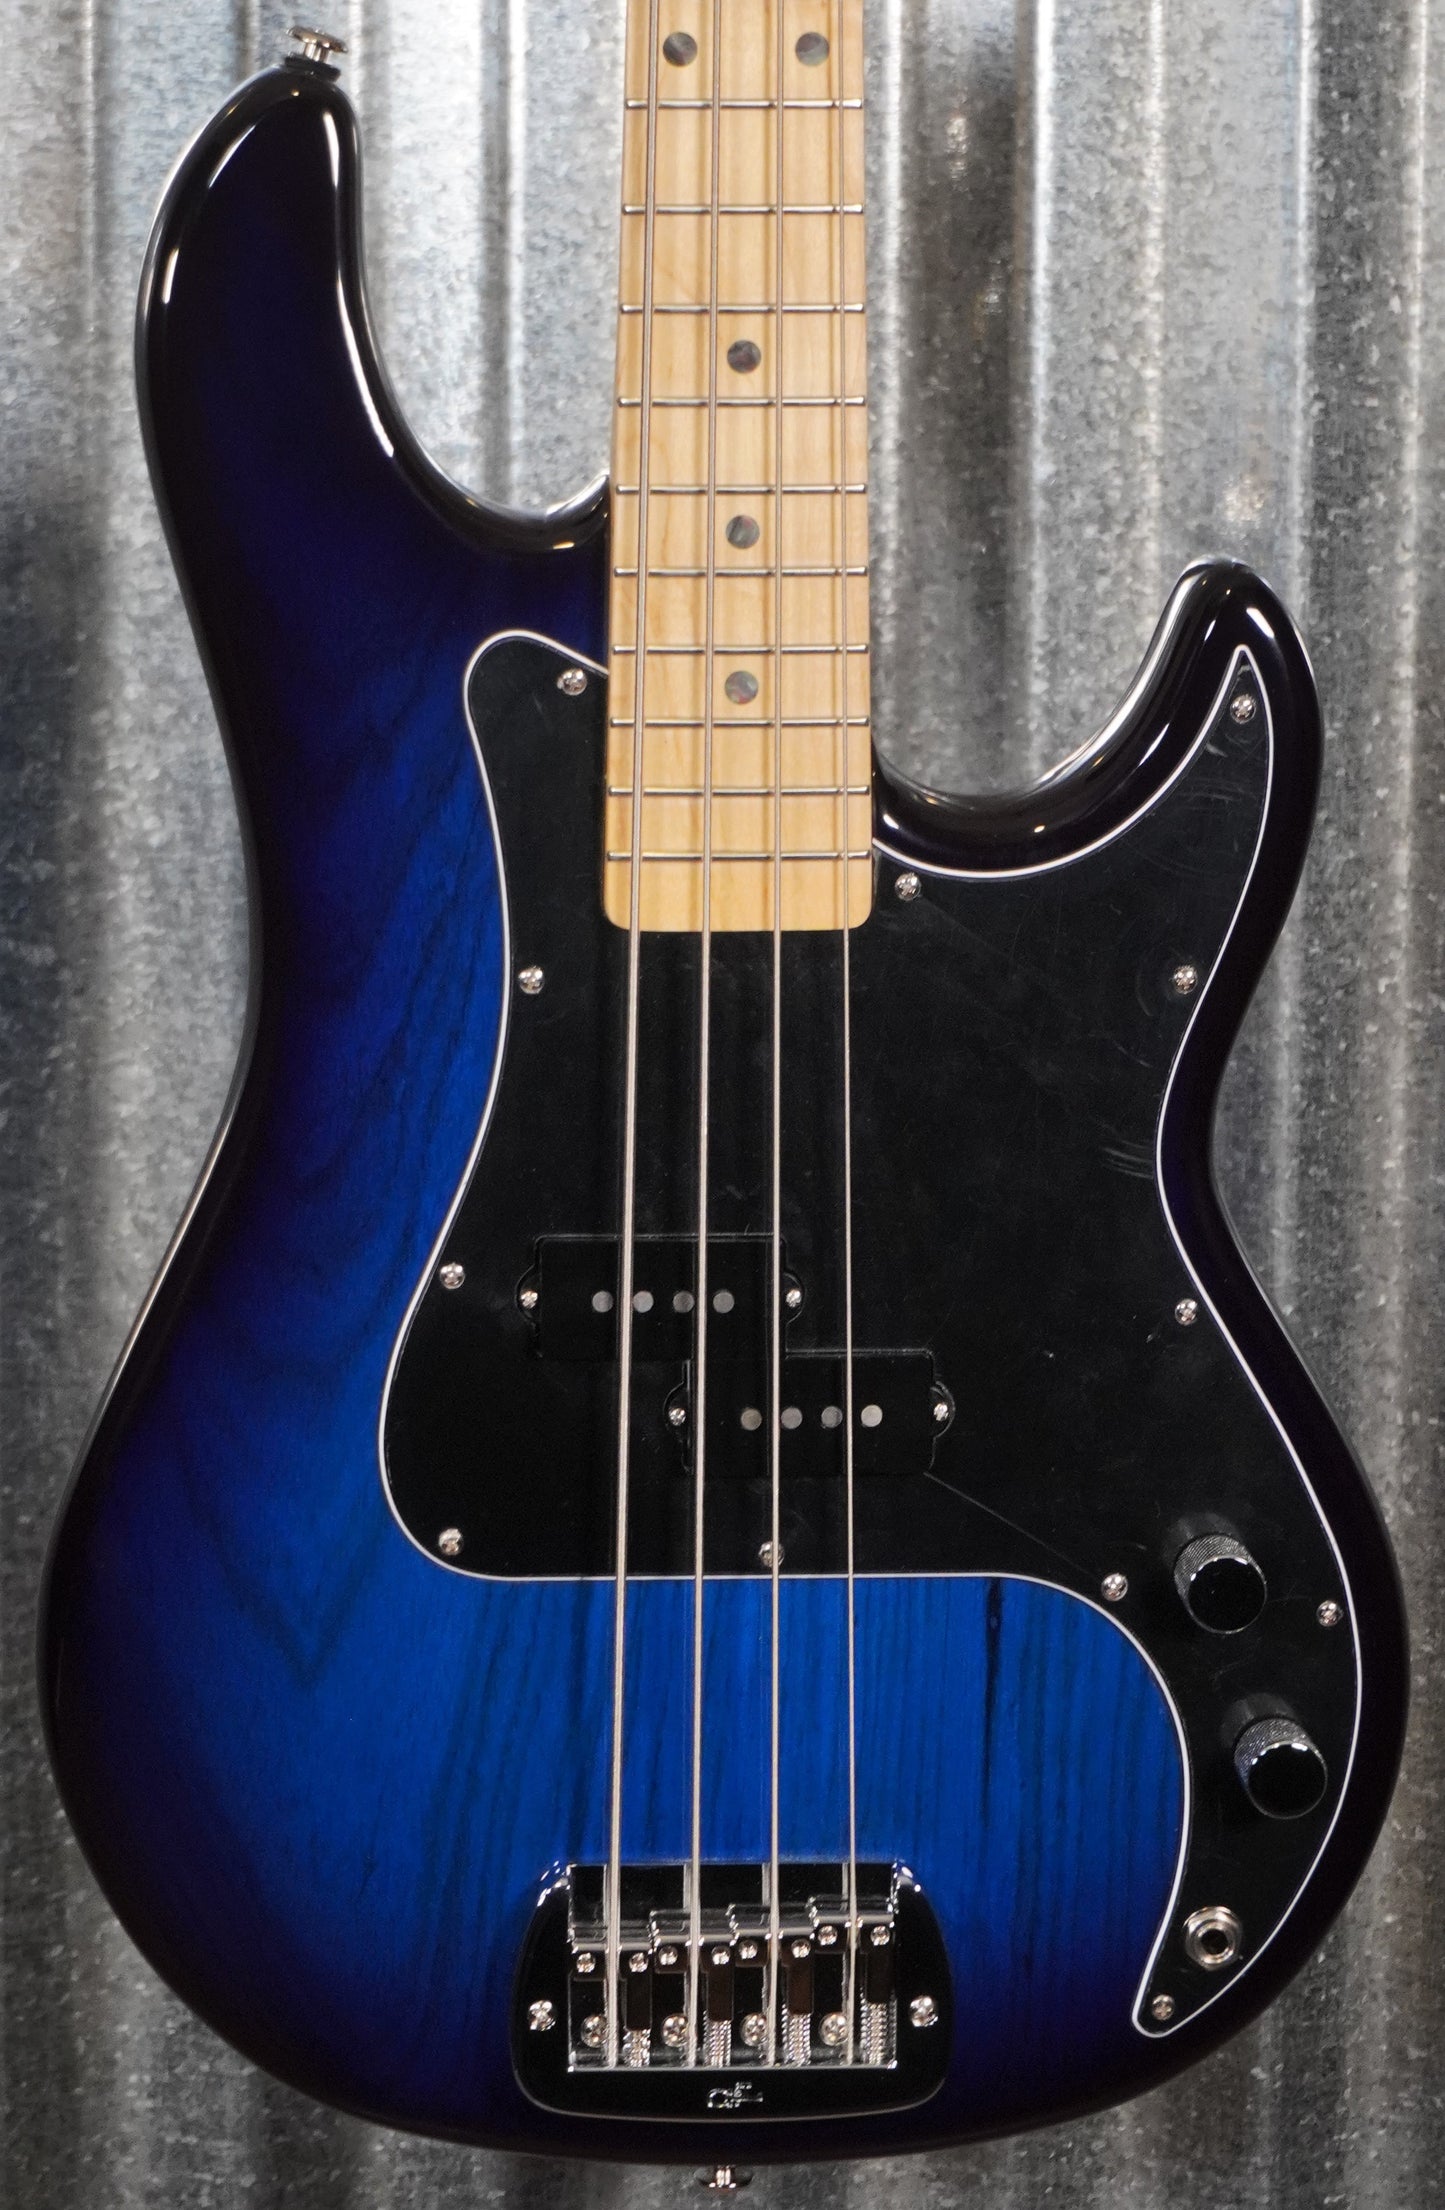 G&L USA LB-100 Blueburst Maple 4 String Bass & Case #2172